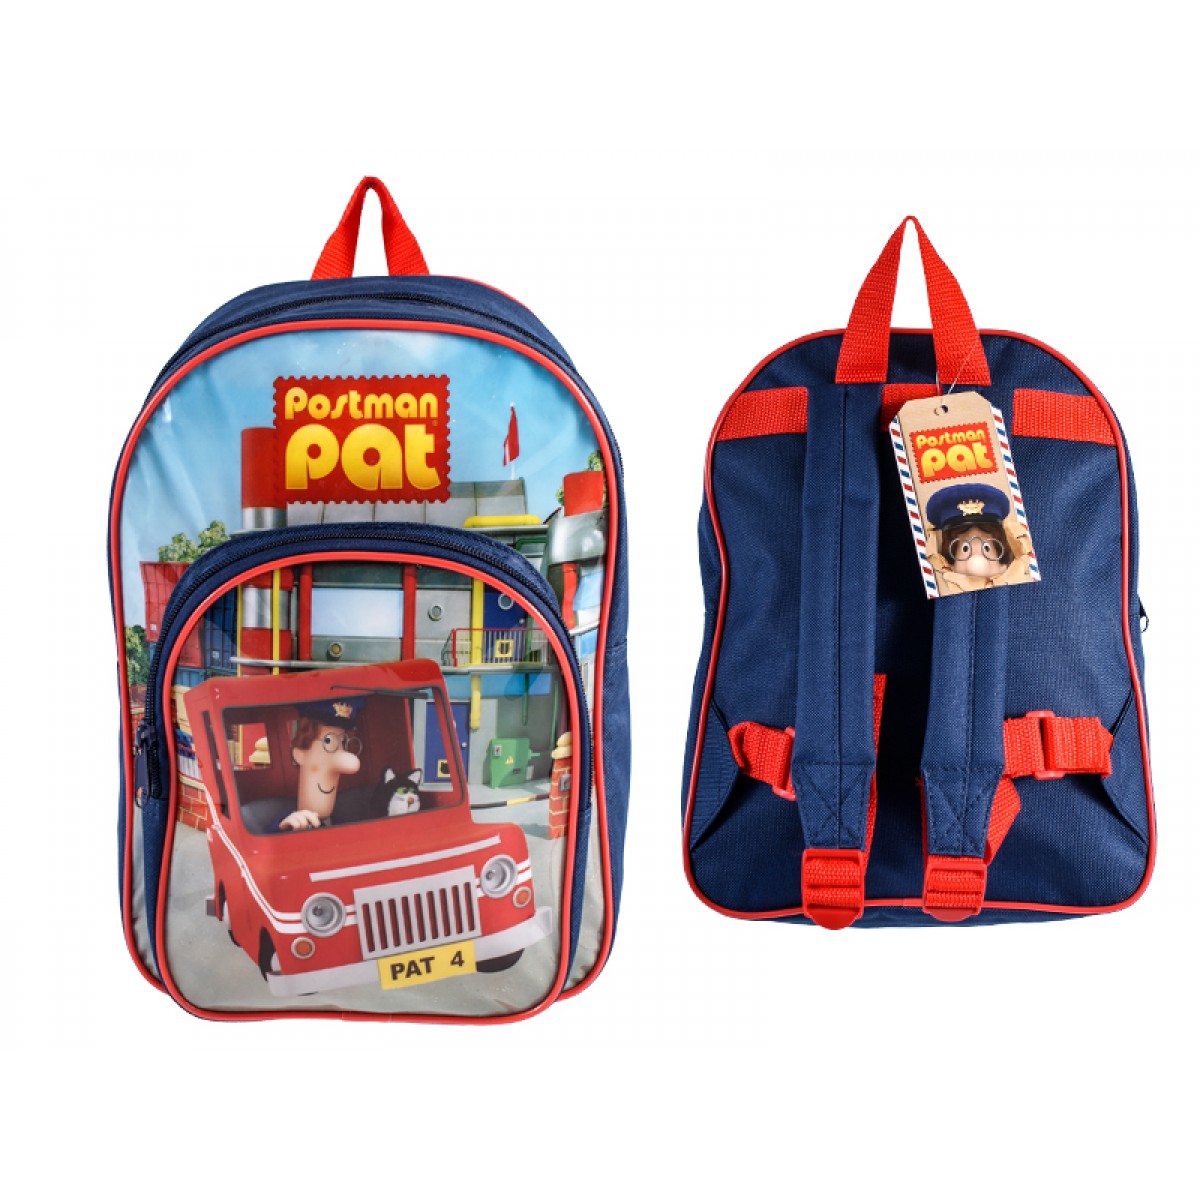 Postman Pat 'Arch Pocket' School Bag Rucksack Backpack